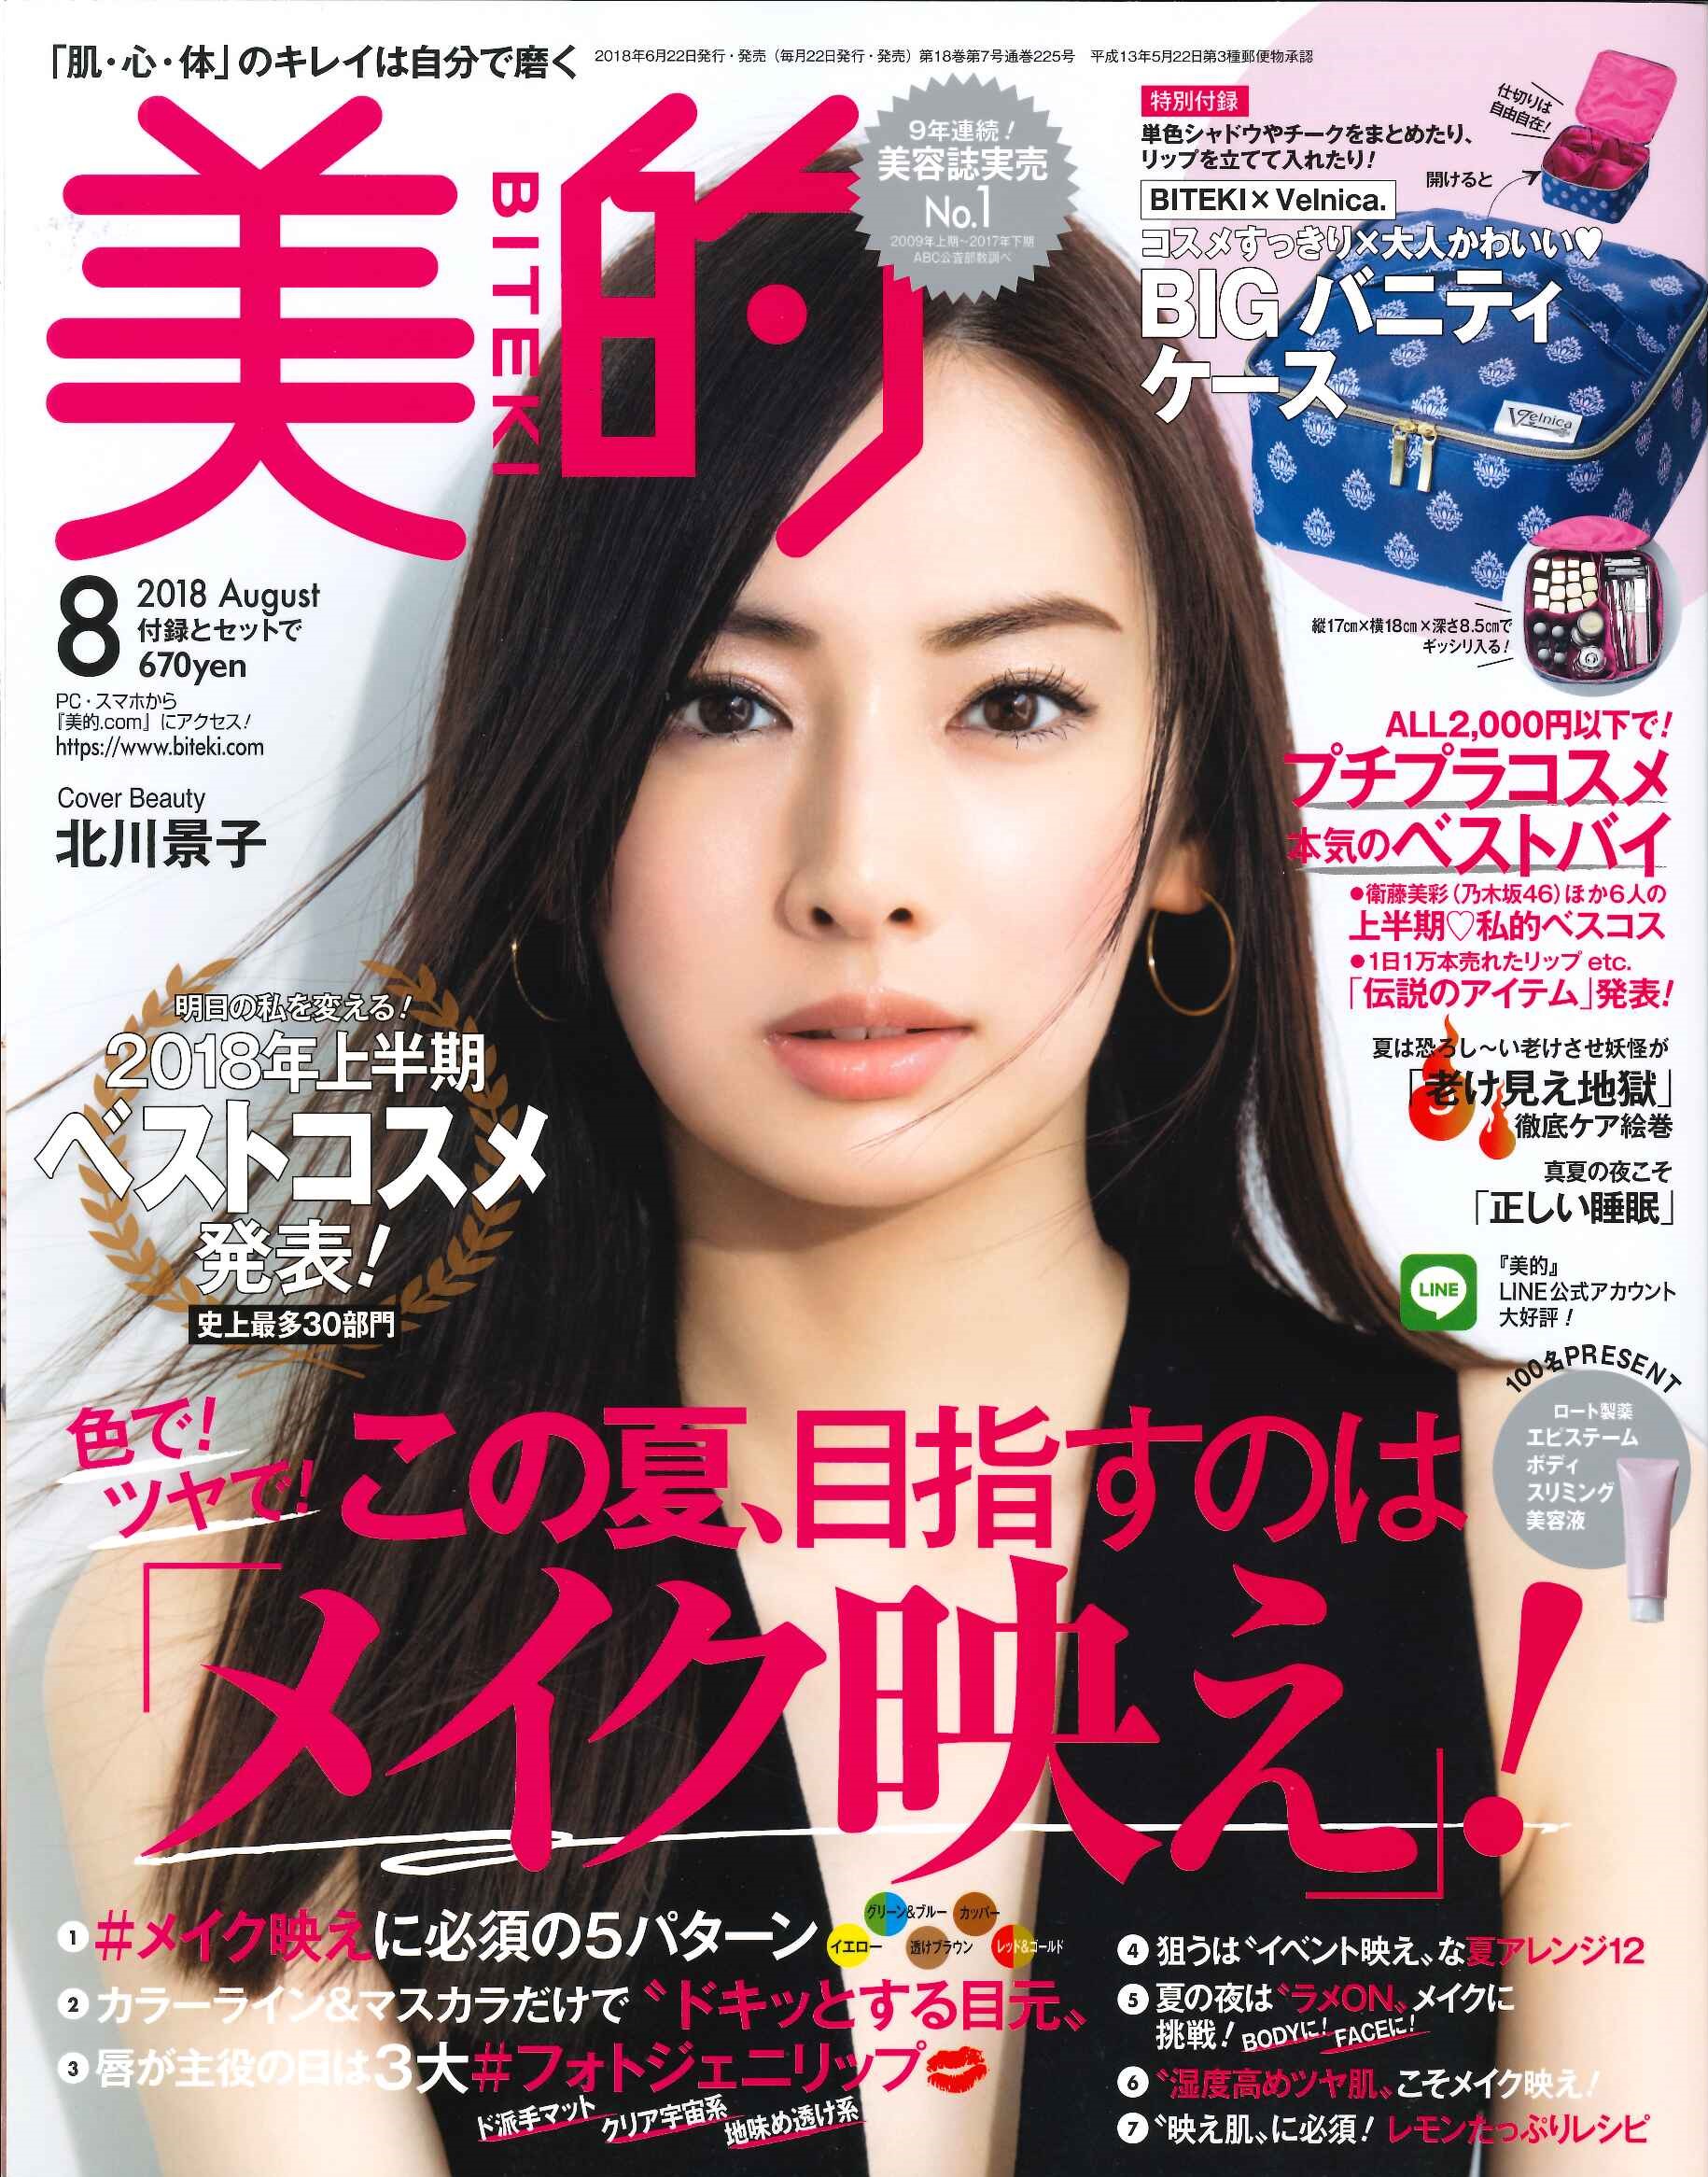 Keiko Kitagawa in “Biteki” August 2018 issue | TAF: apn